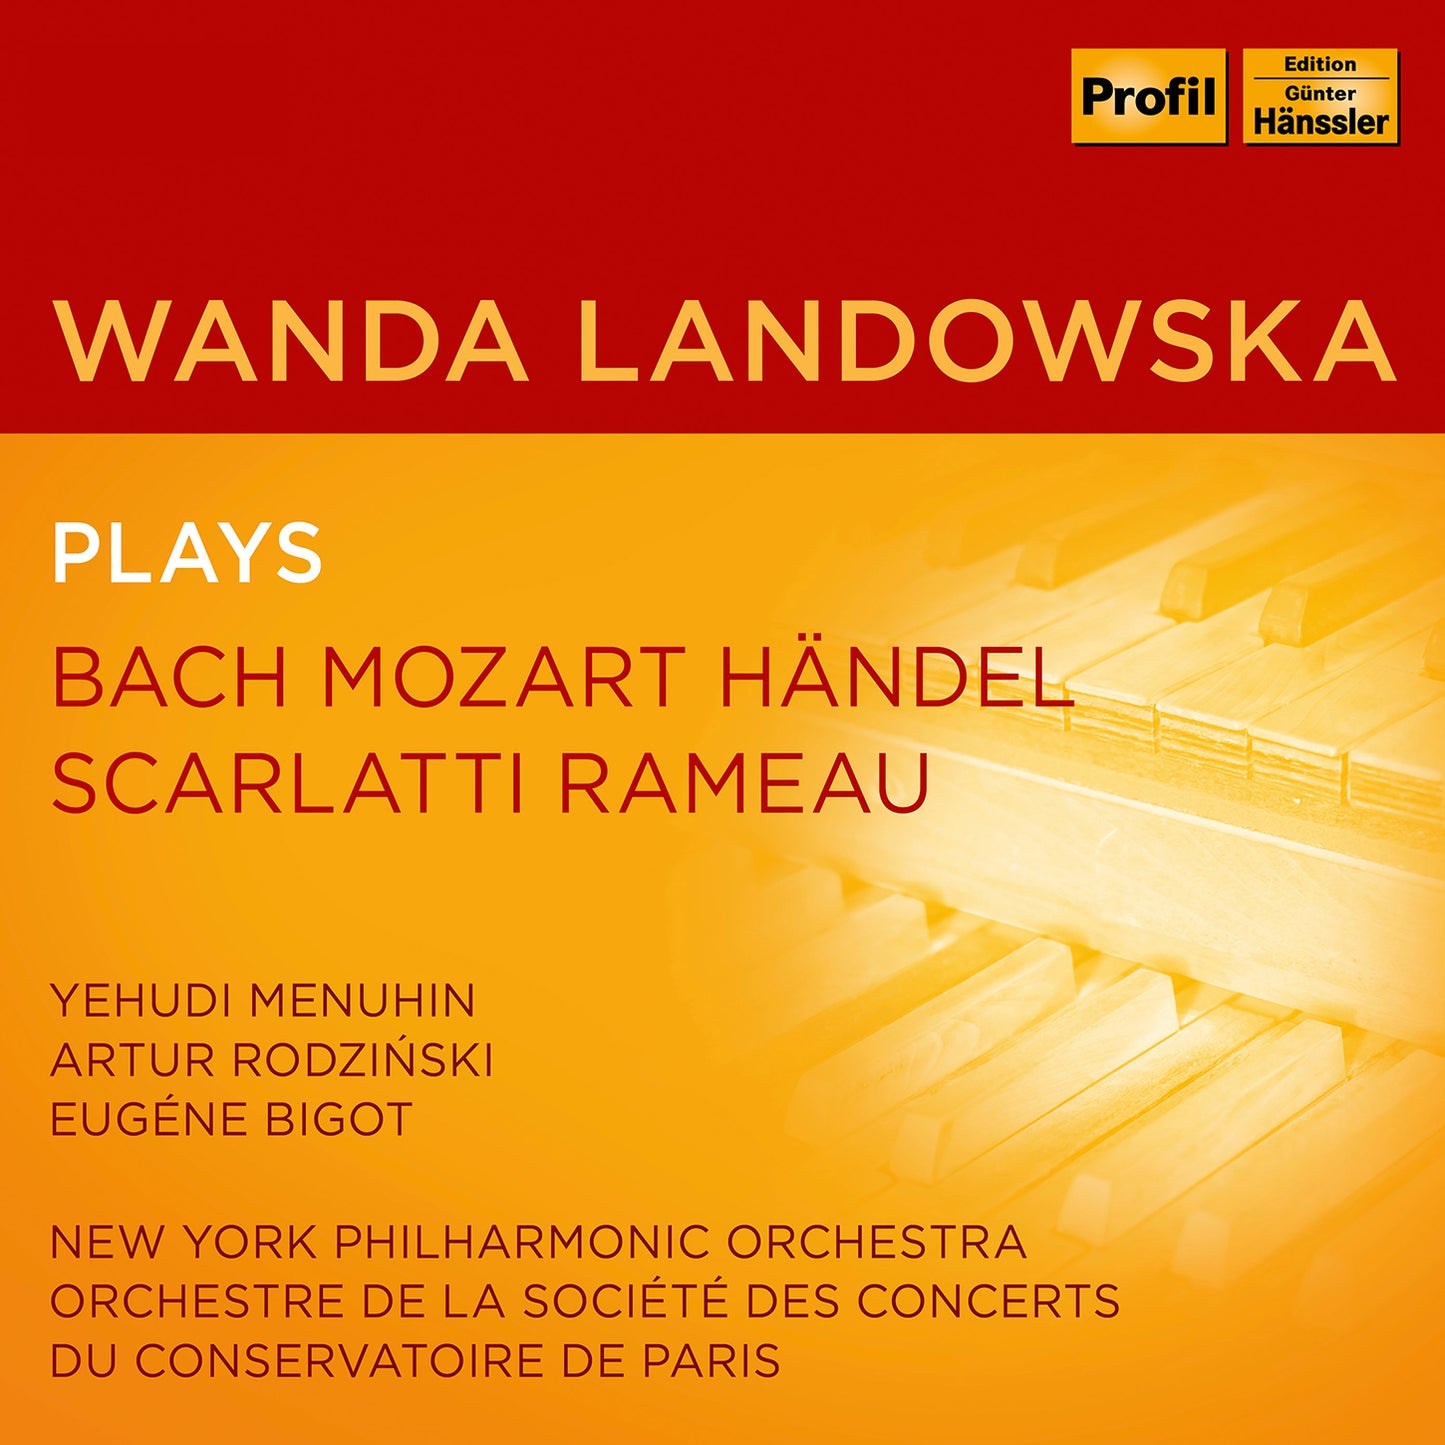 Wanda Landowska Plays Bach, Mozart, Handel, Scarlatti & Rame  Yehudi Menuhin, Wanda Landowska, Du Conservatoire Paris, New York Philharmonic Orchestra